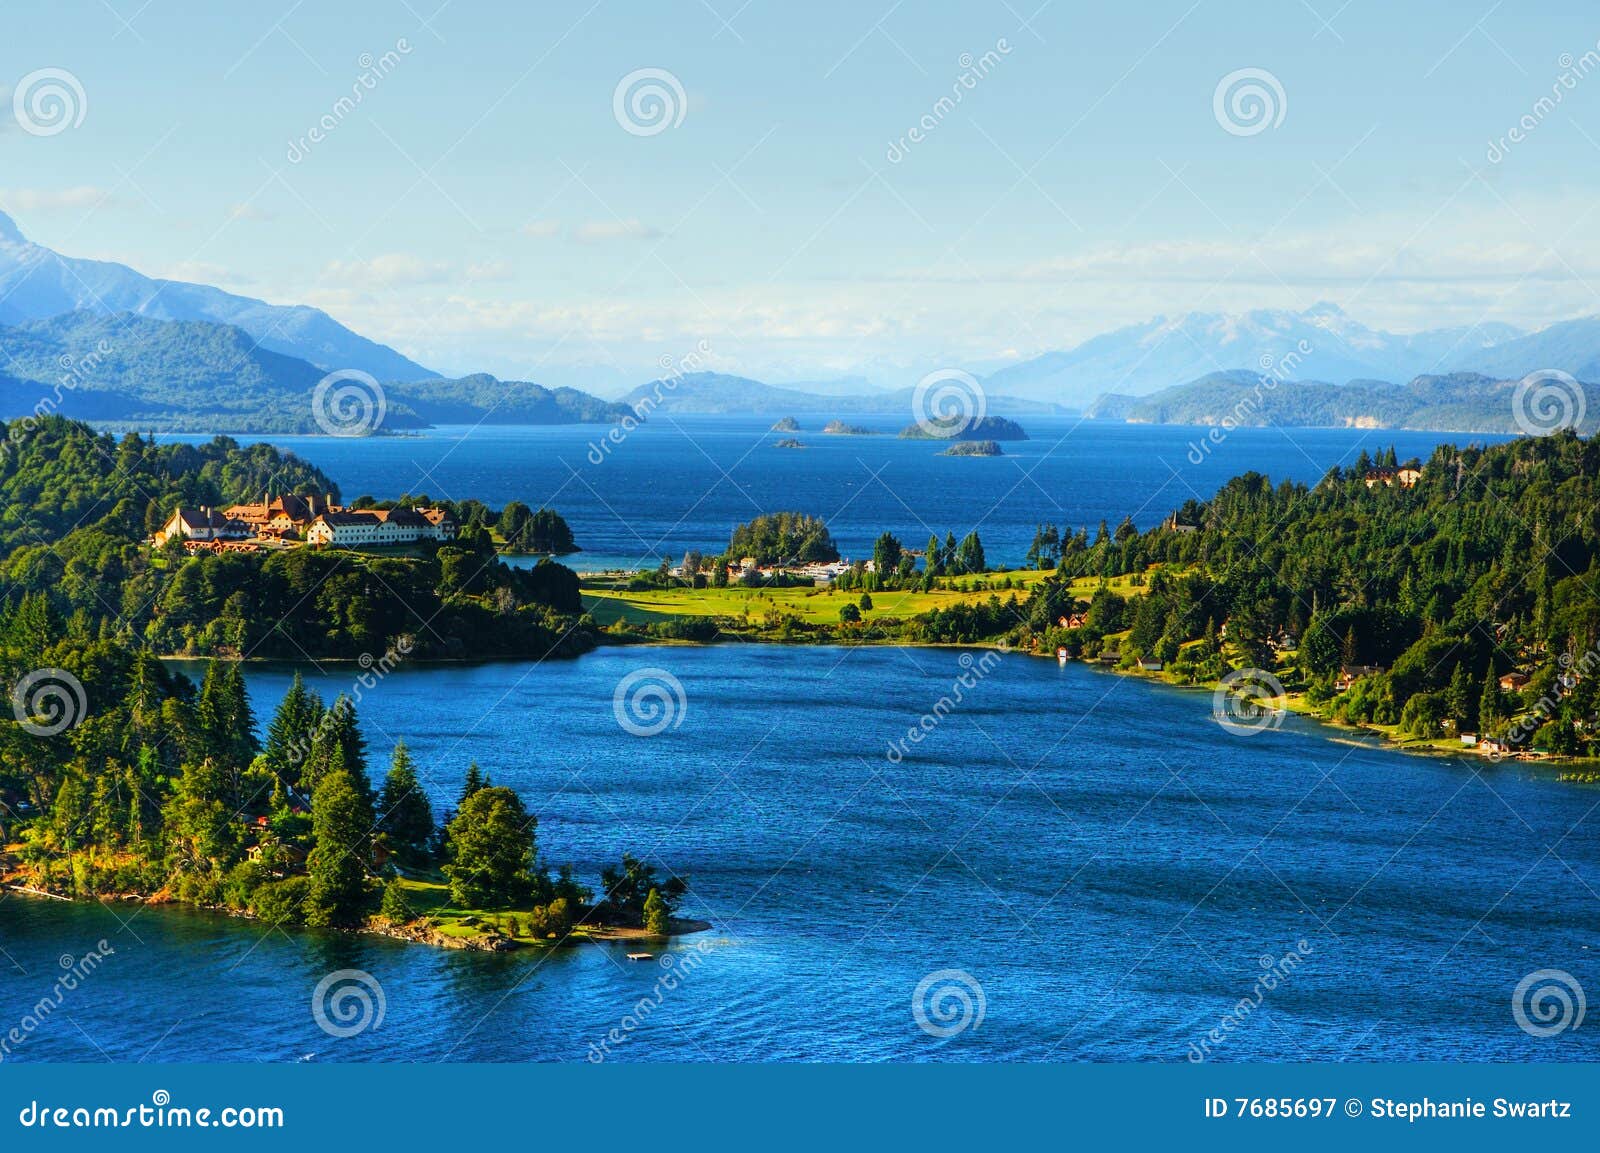 lakes in patagonia